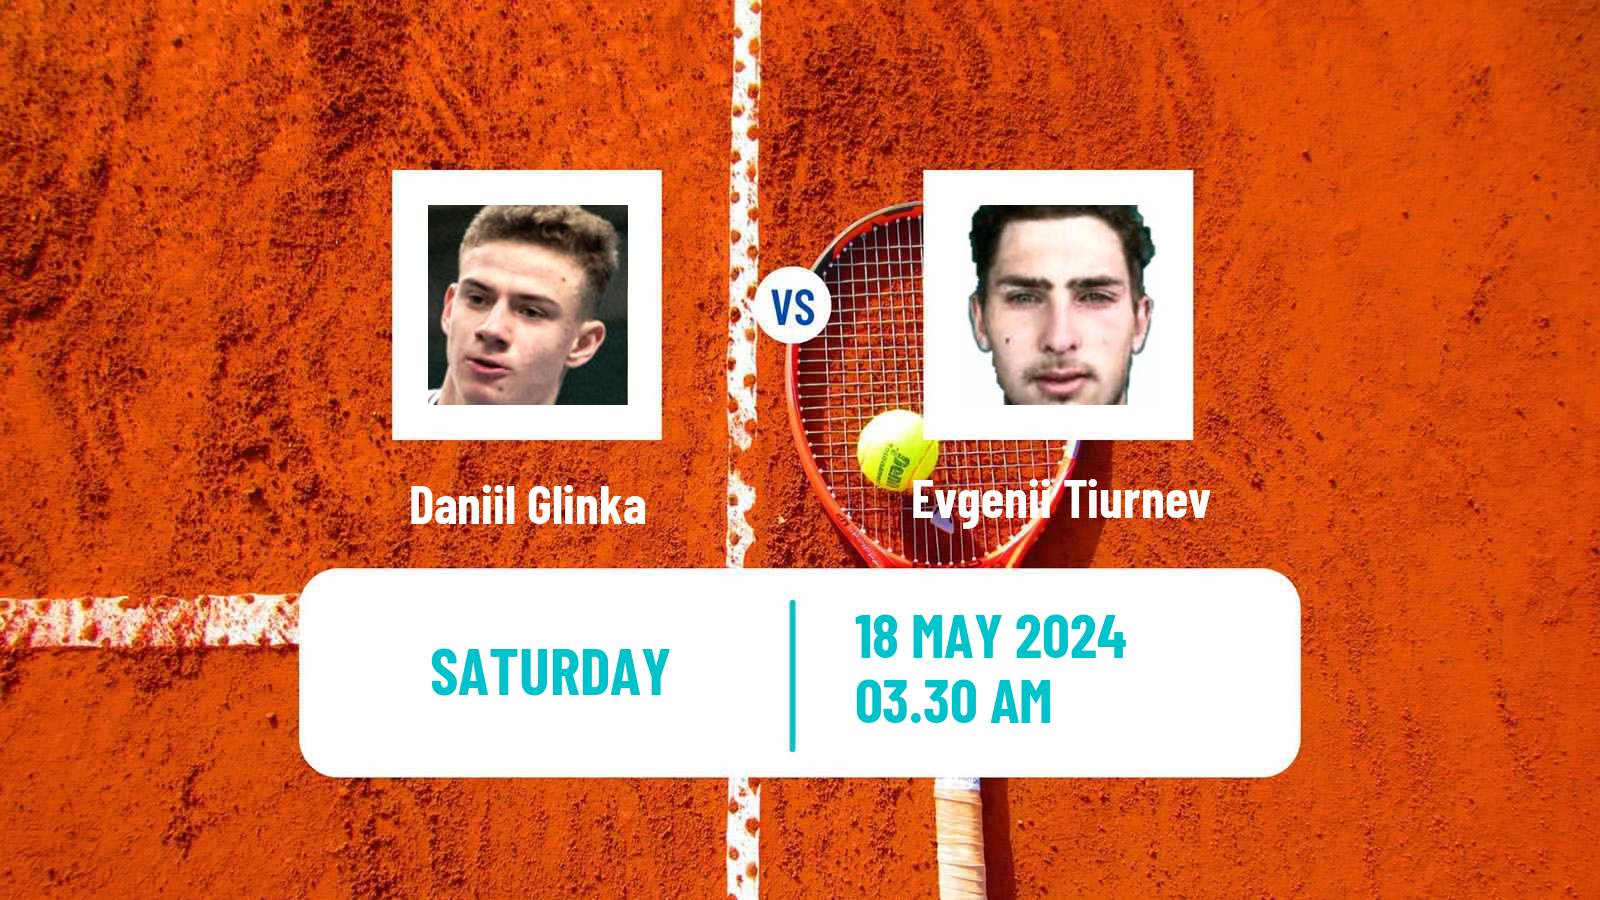 Tennis ITF M25 Kachreti Men Daniil Glinka - Evgenii Tiurnev